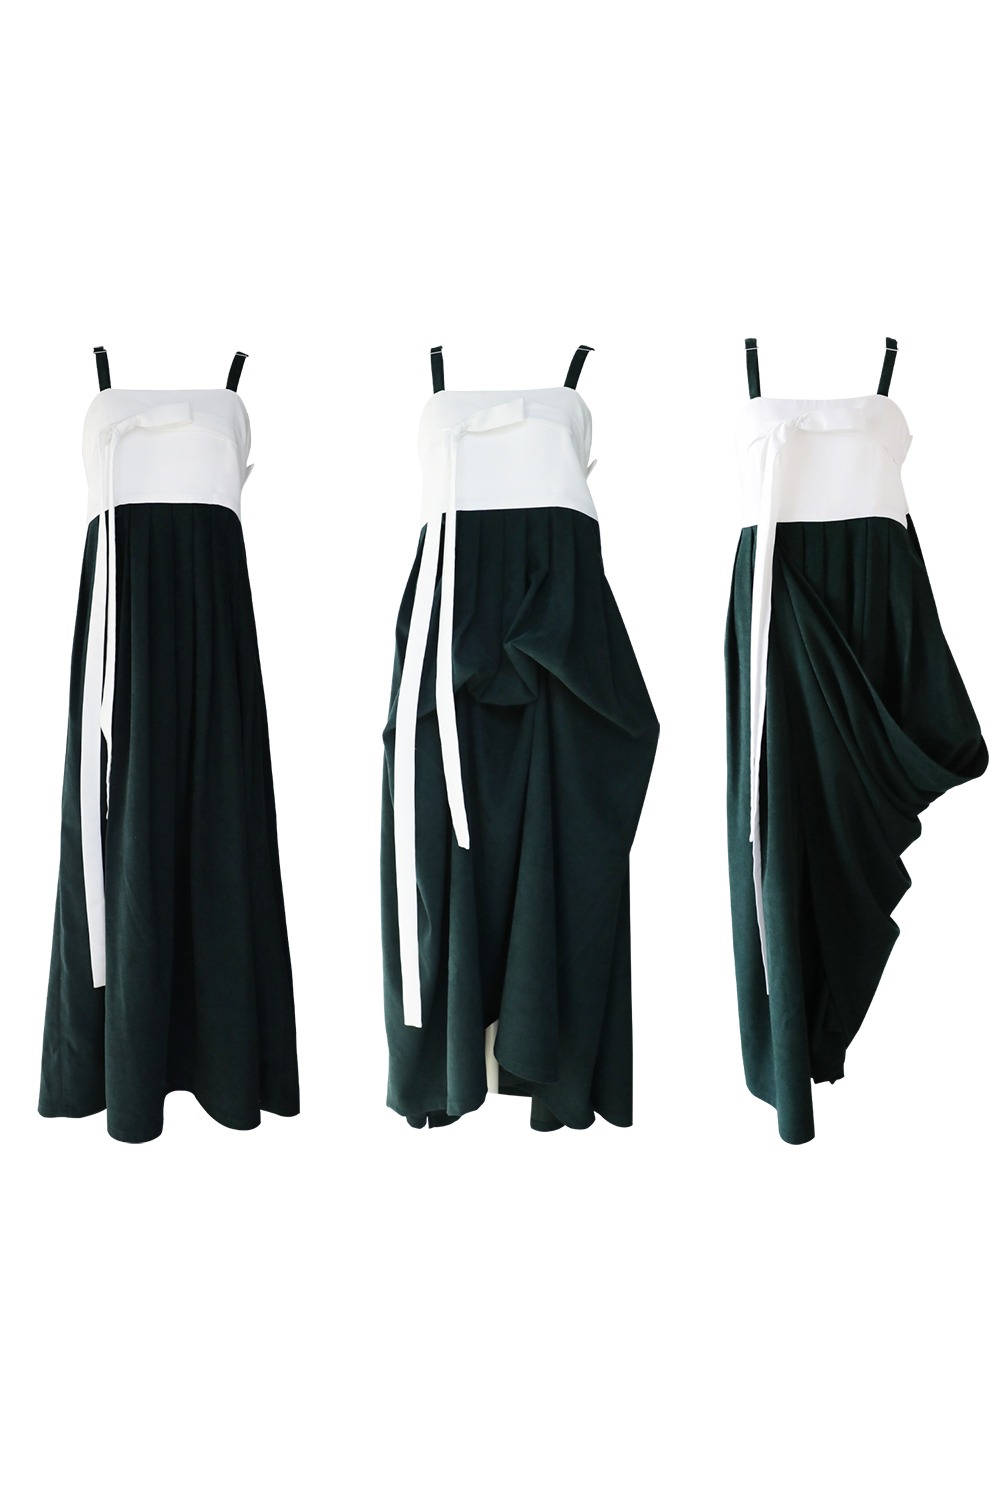 3WAY Soft Hem Skirt [Green] Pre-order